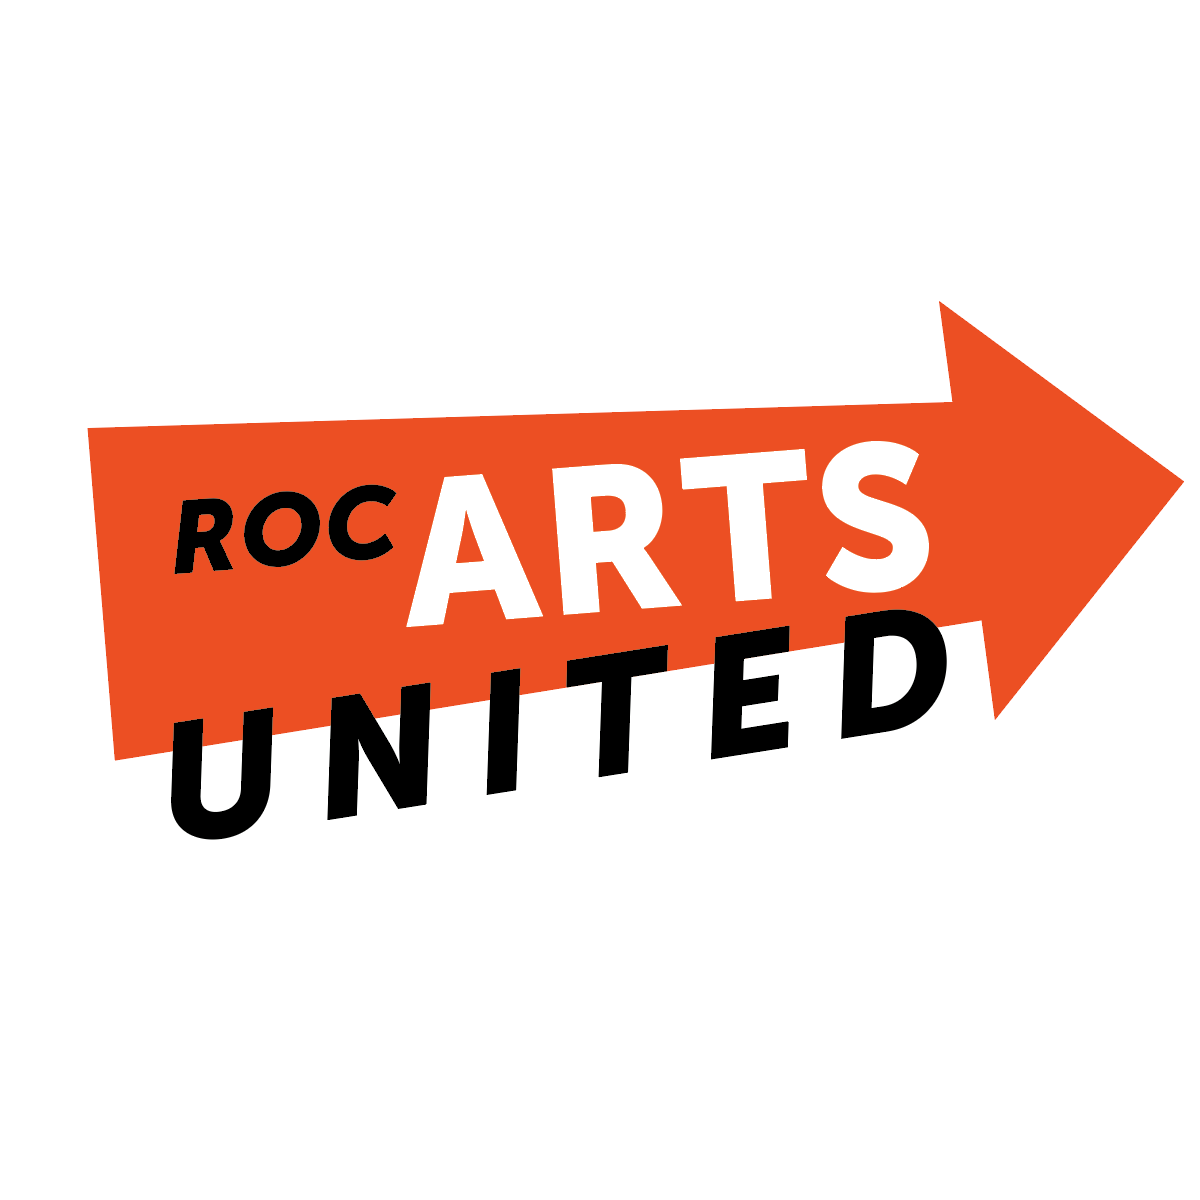 Roc Arts United